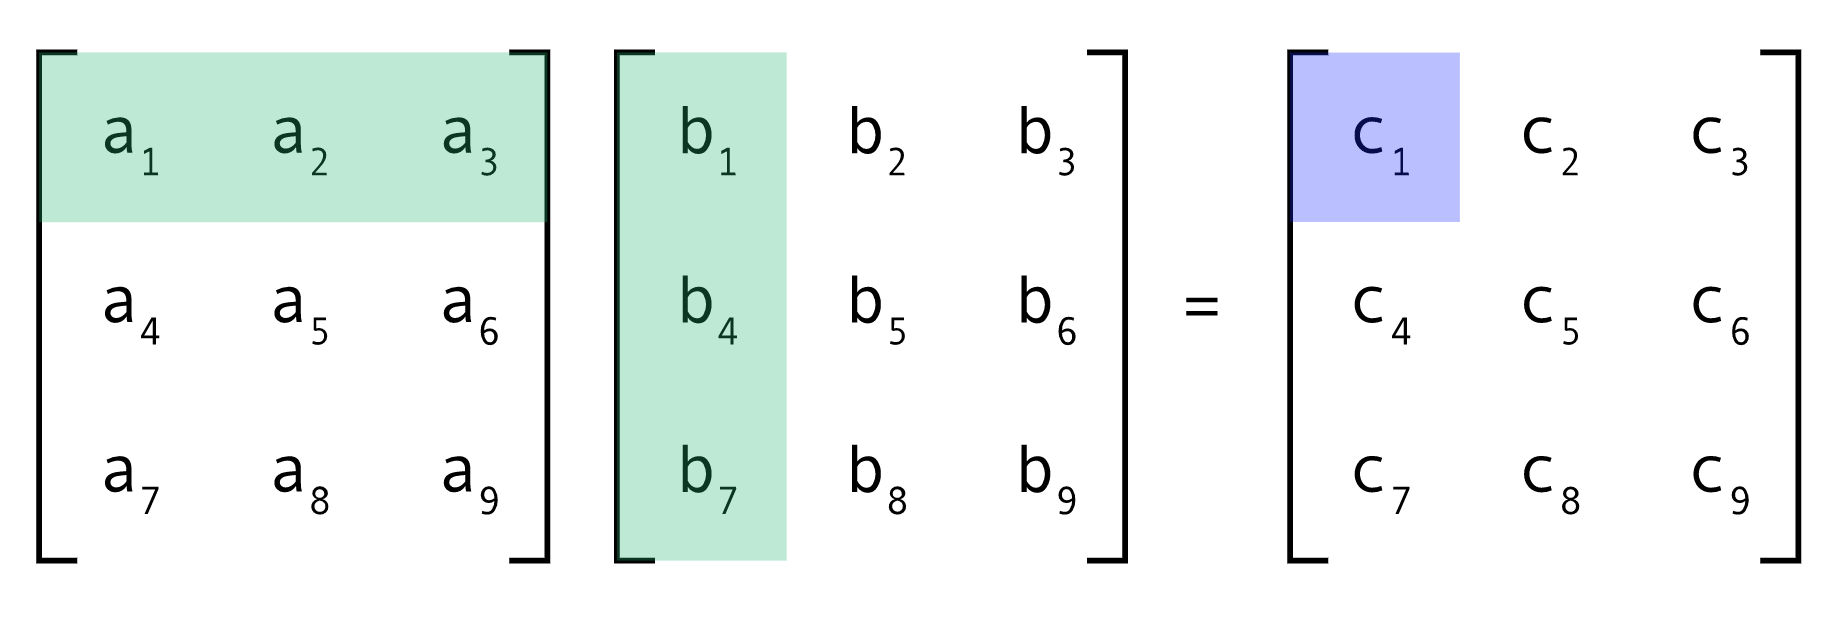 3x3 matrix multiplication